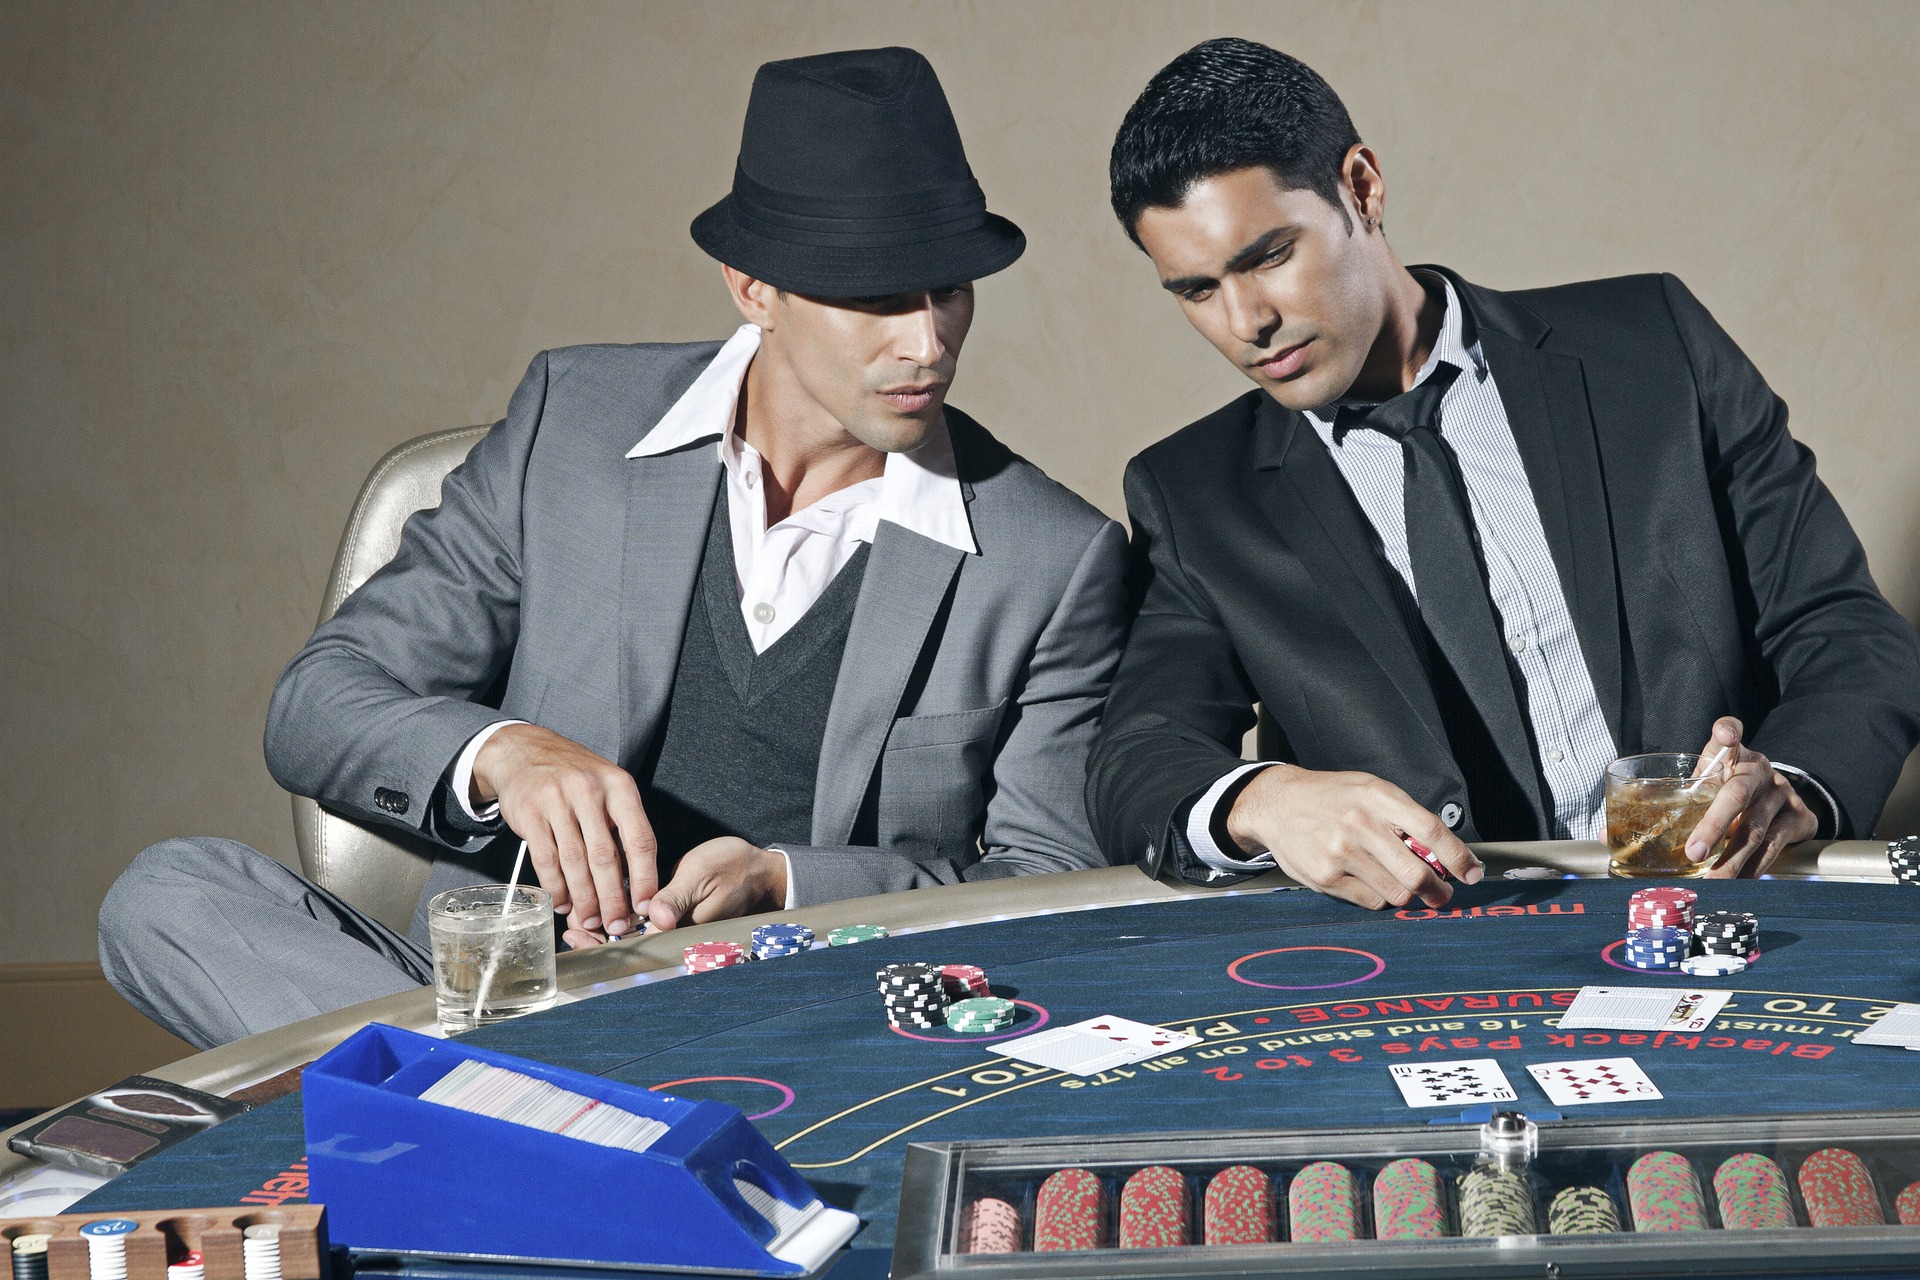 Gambling as a Profession